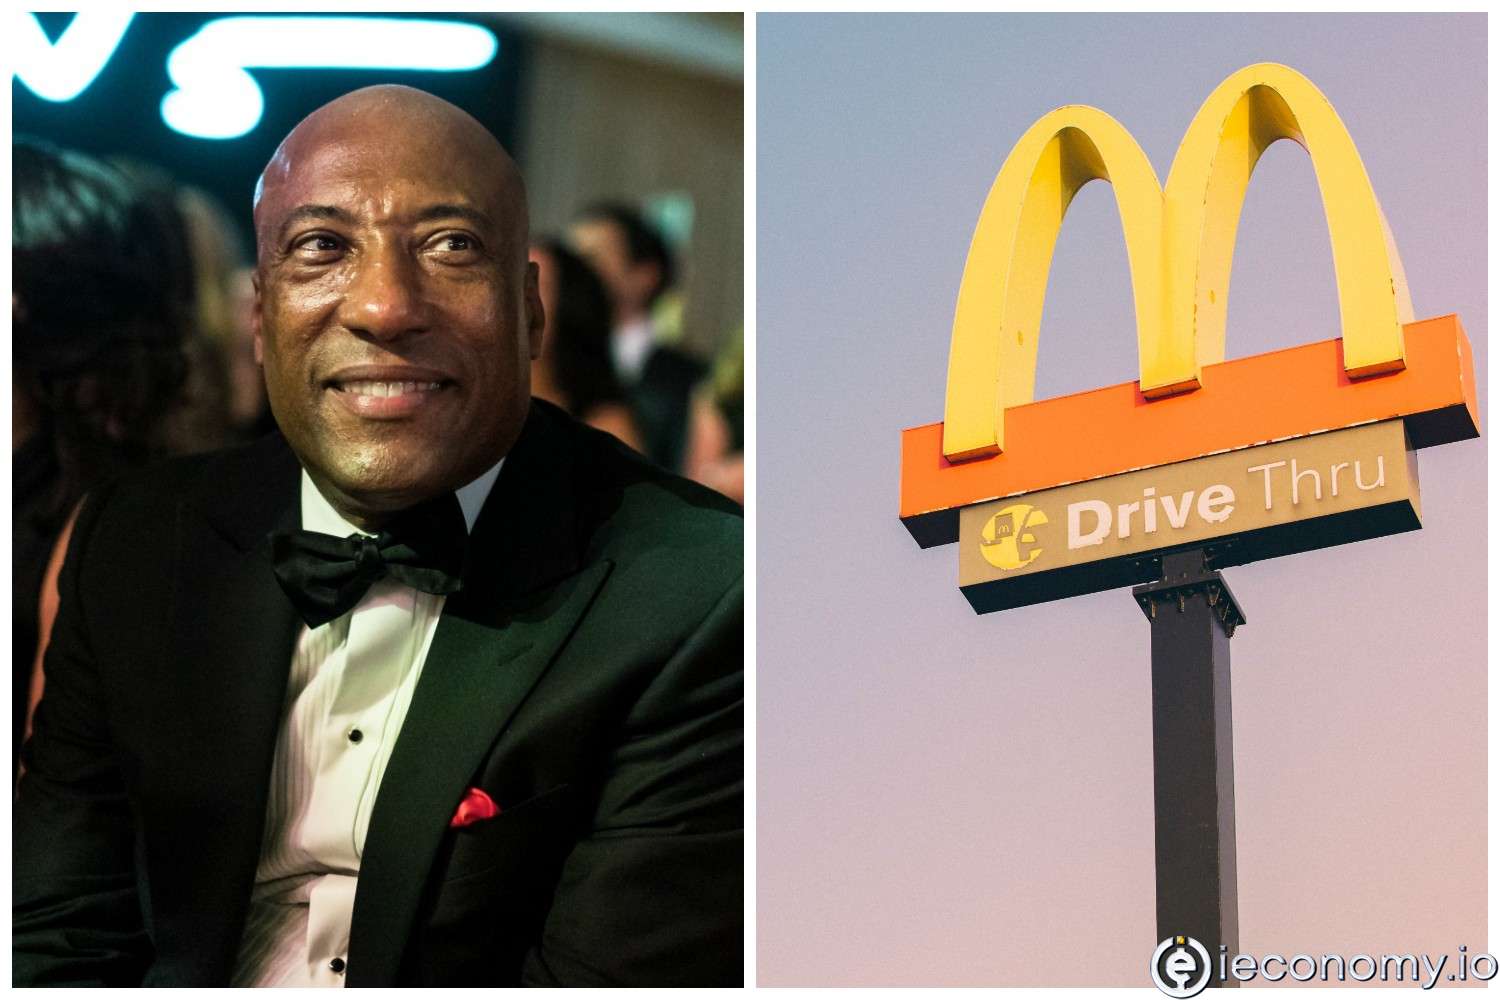 Media businessman has sued McDonald’s for racial discrimination